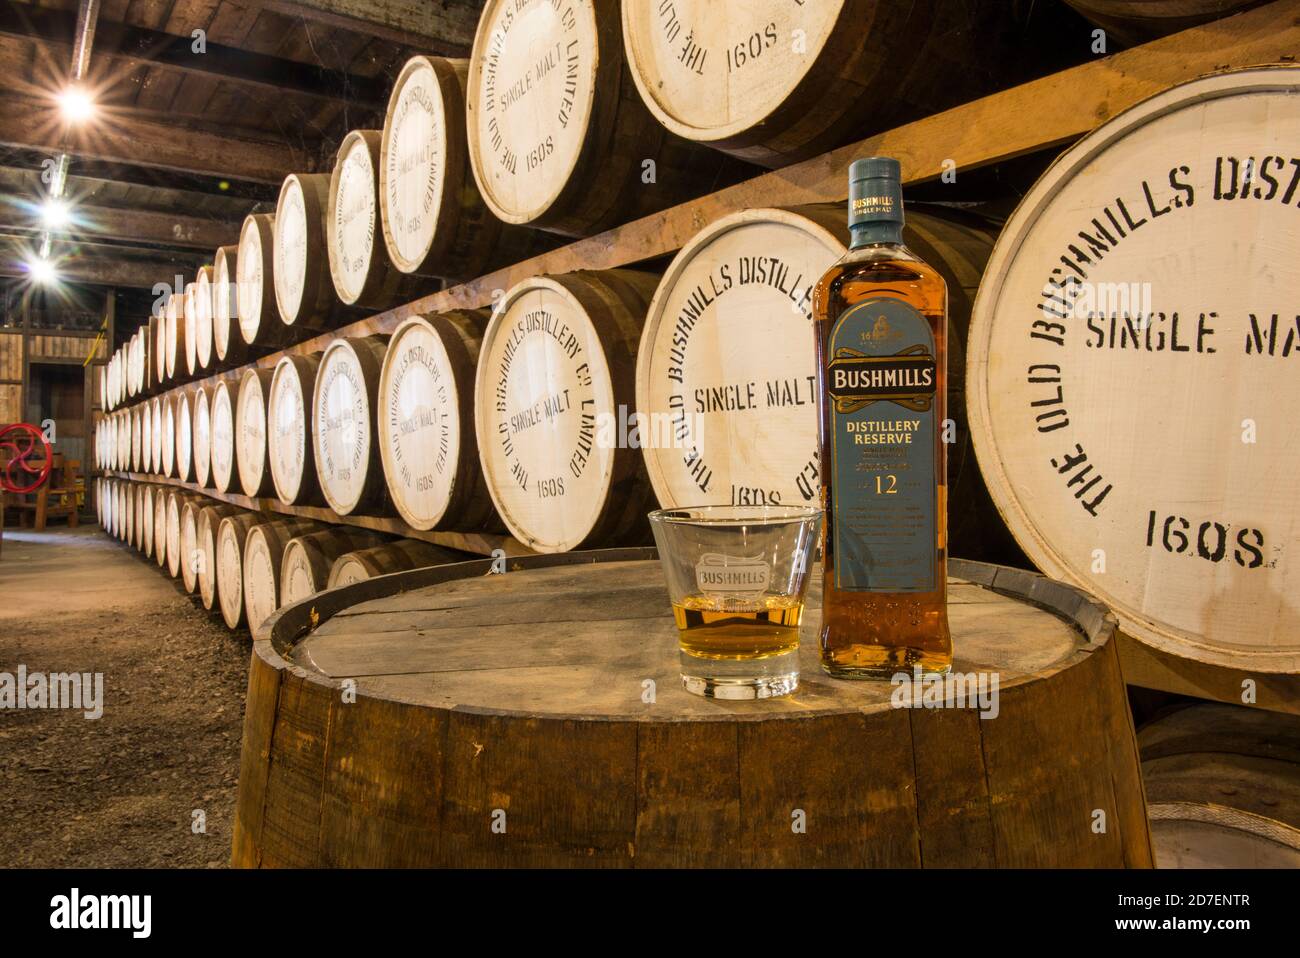 Bushmills whisky produced at a distillery in Bushmills, County Antrim, Northern Ireland, U.K. Stock Photo